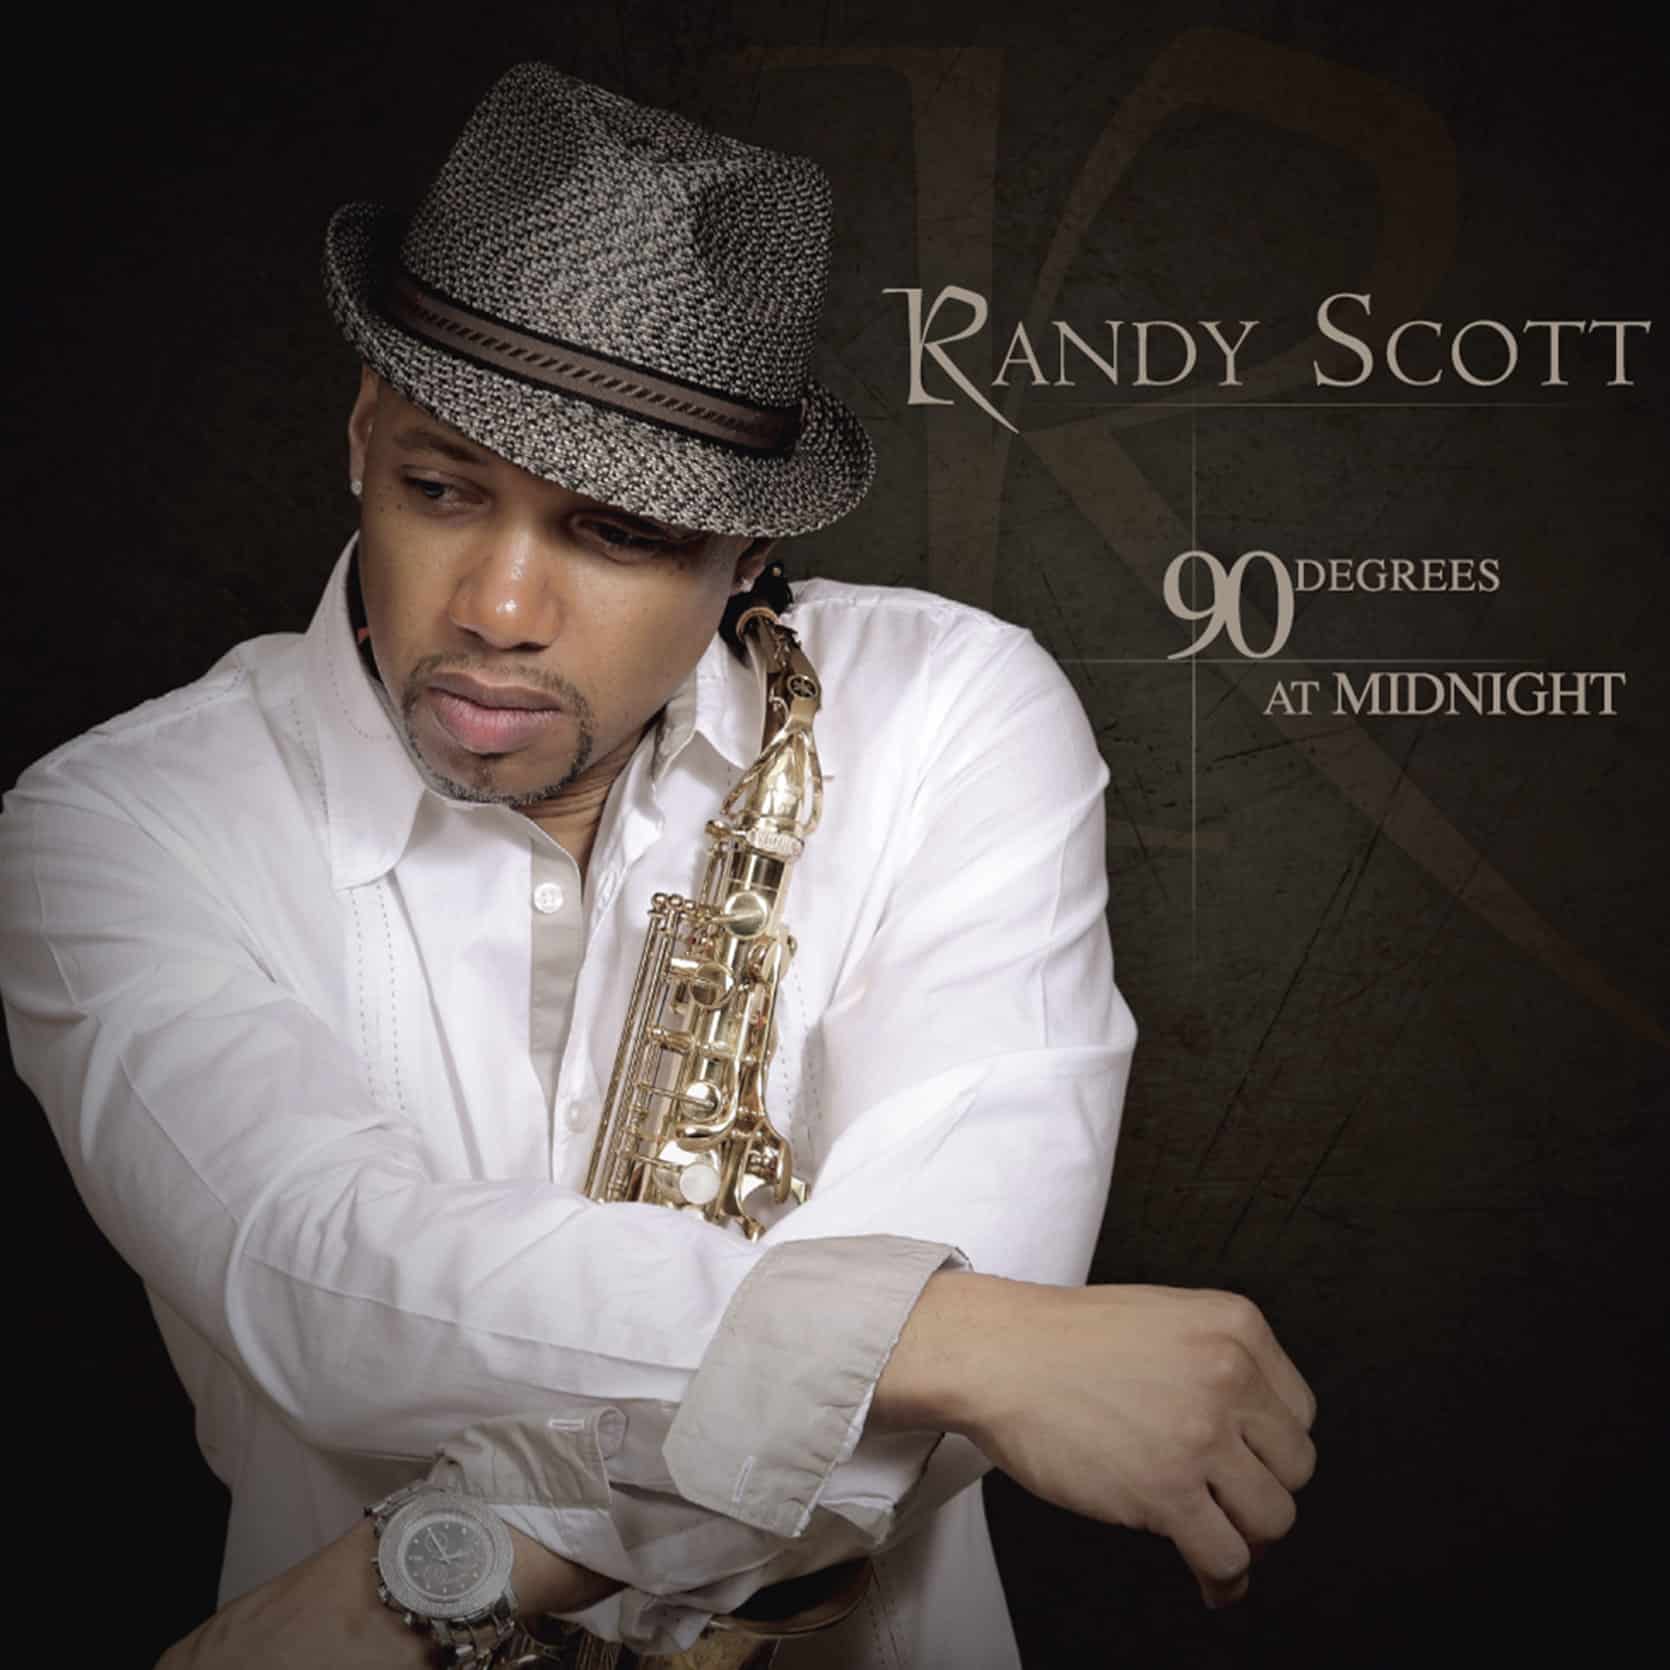 90 Degrees at Midnight by Smooth Jazz recording artist Randy Scott